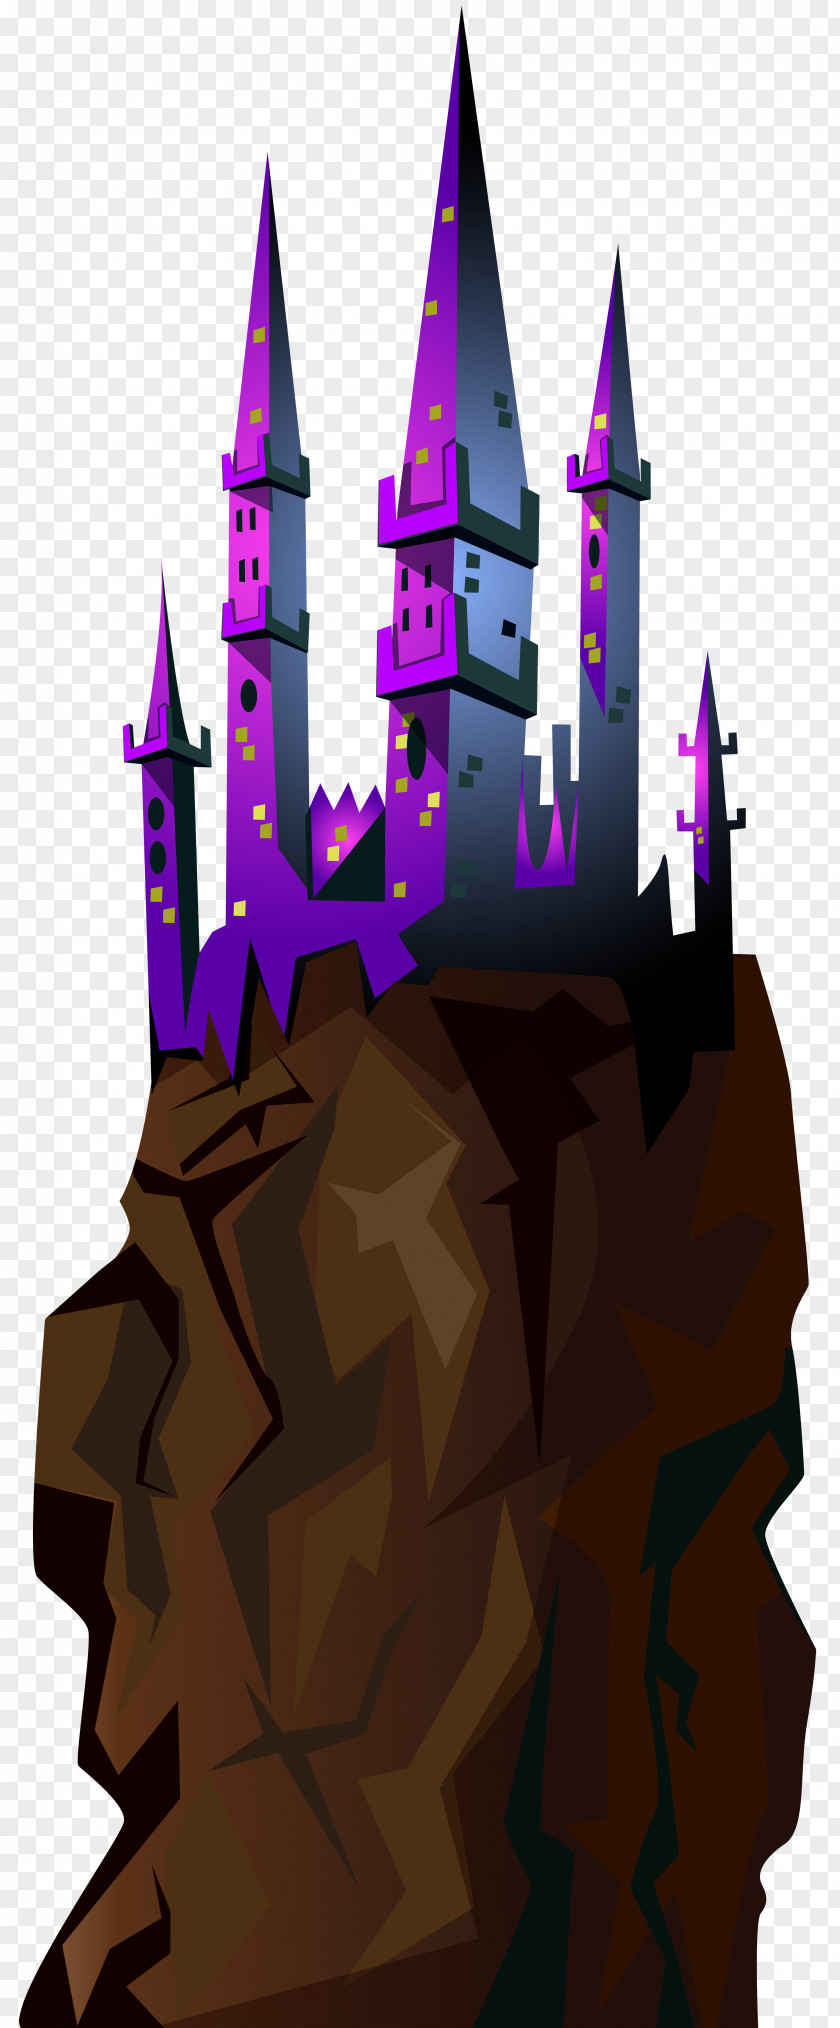 Castle On The Rock Transparent Clip Art Image File Formats Lossless Compression PNG